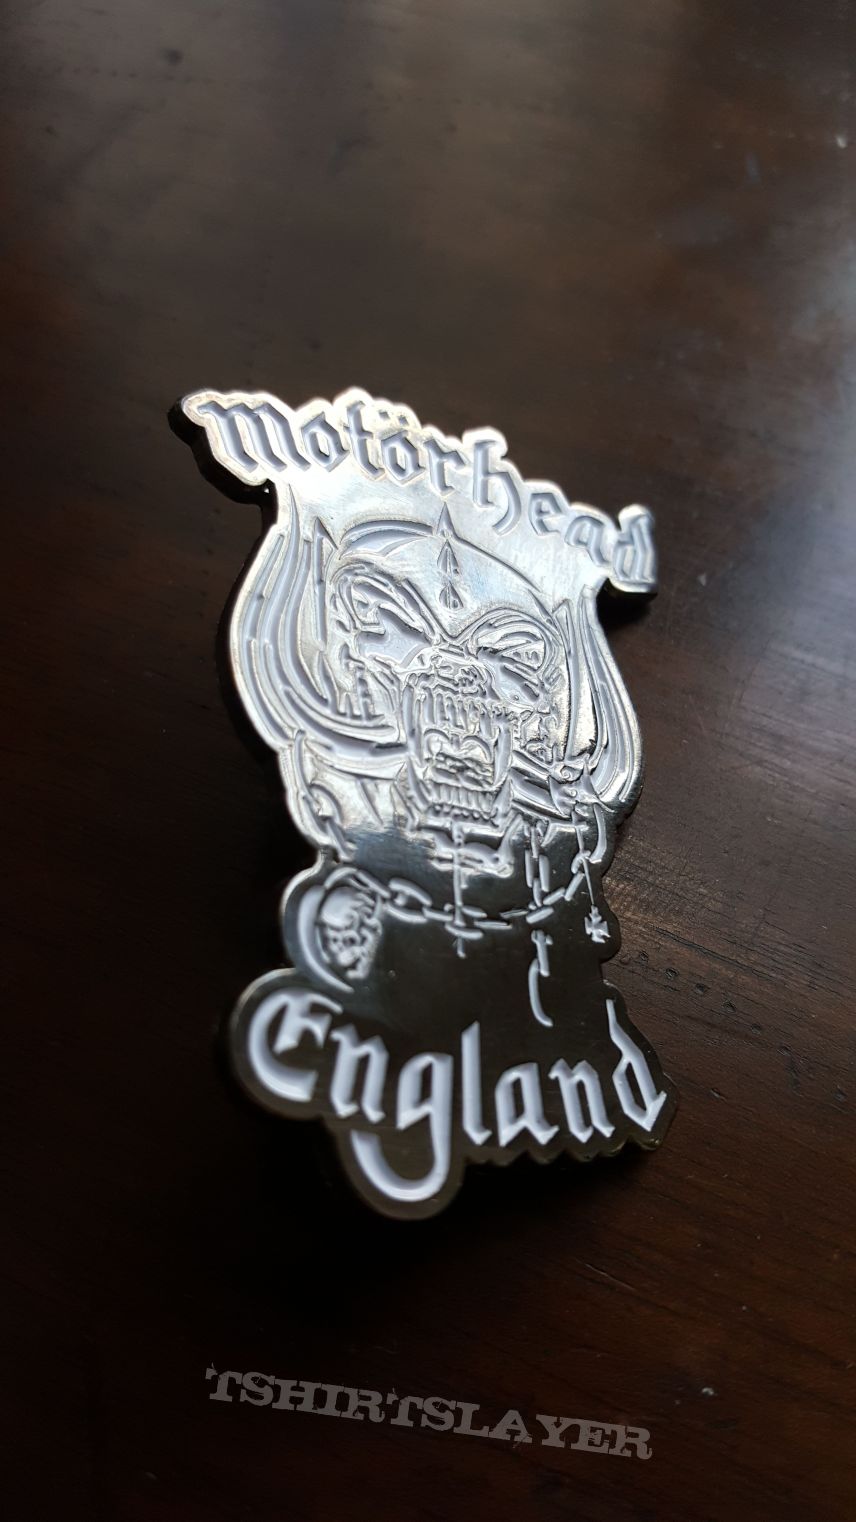 Motörhead England - Metal Pin